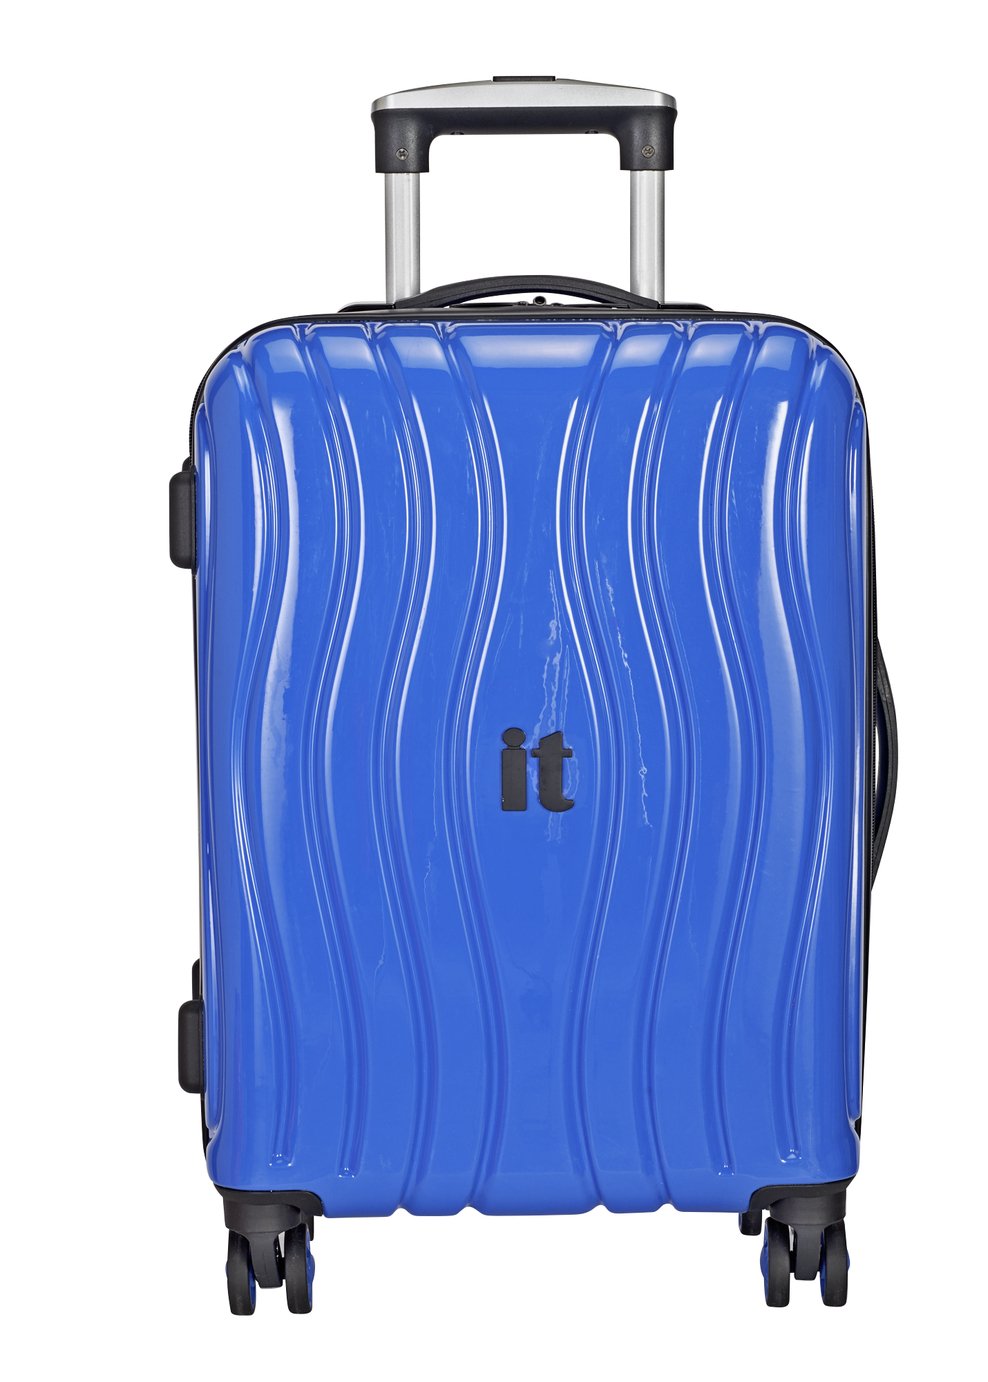 IT Luggage Large 8 Wheel Hard Suitcase - Metallic Blue